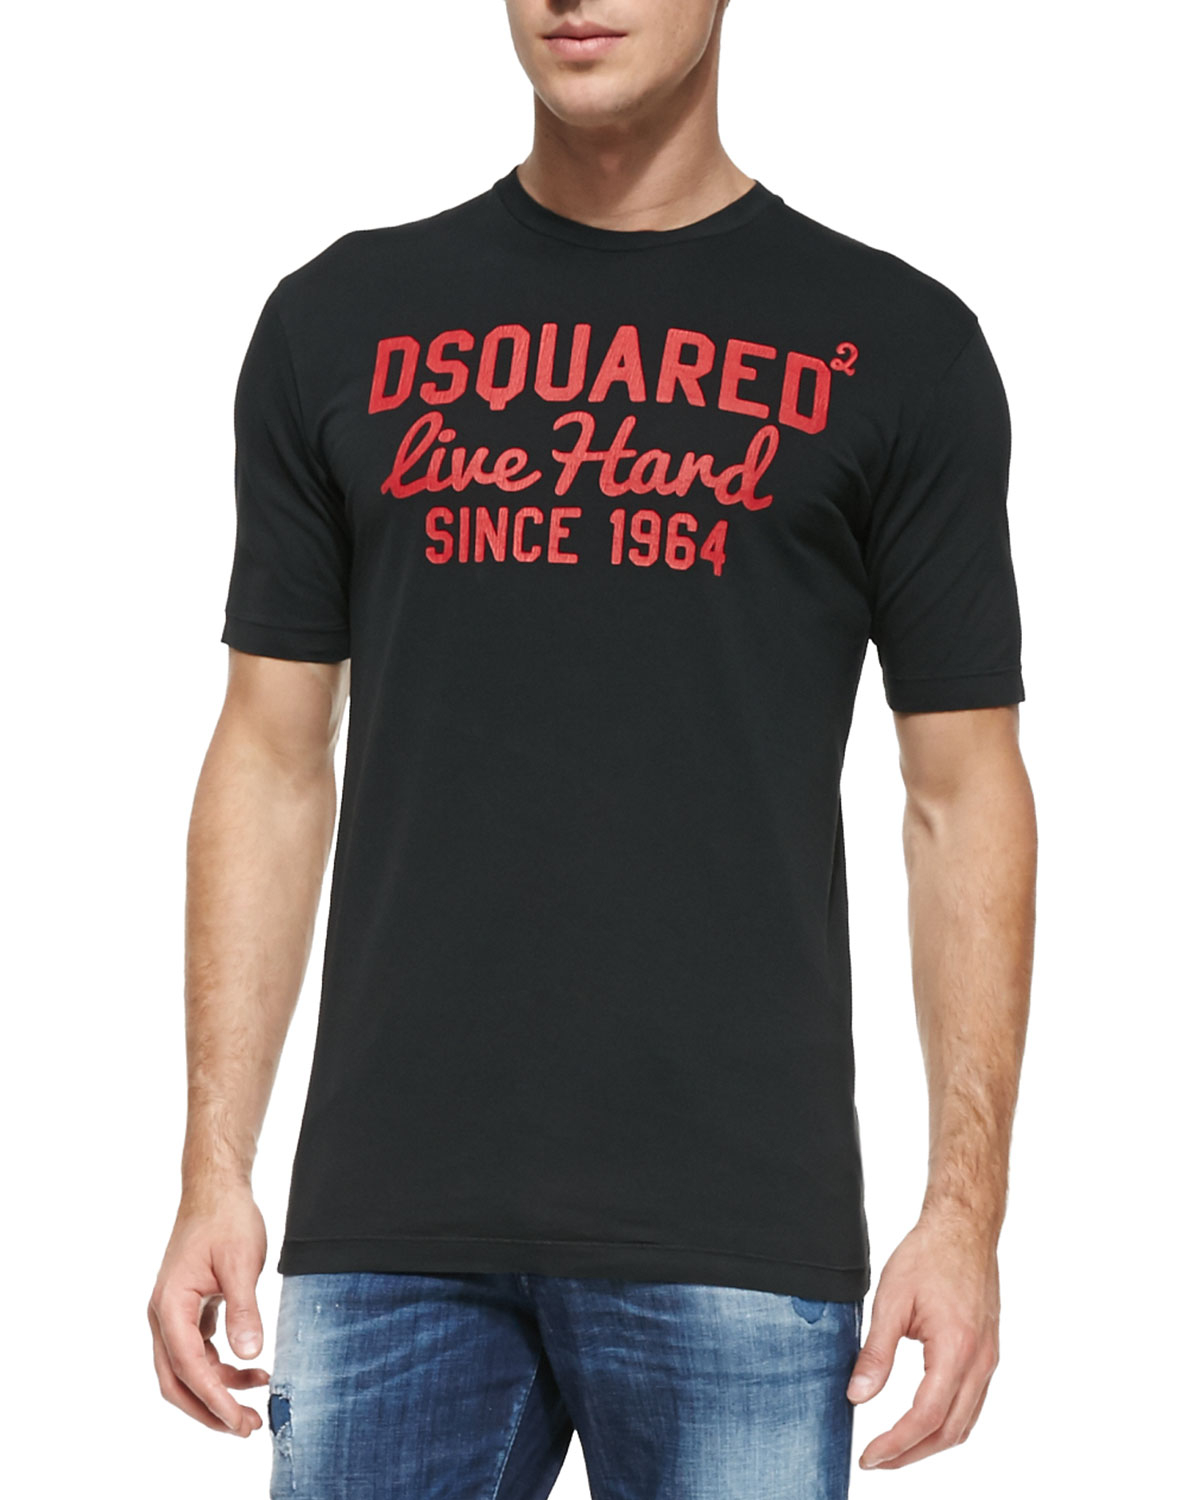 DSquared² Logo Live Hard Tshirt Black 